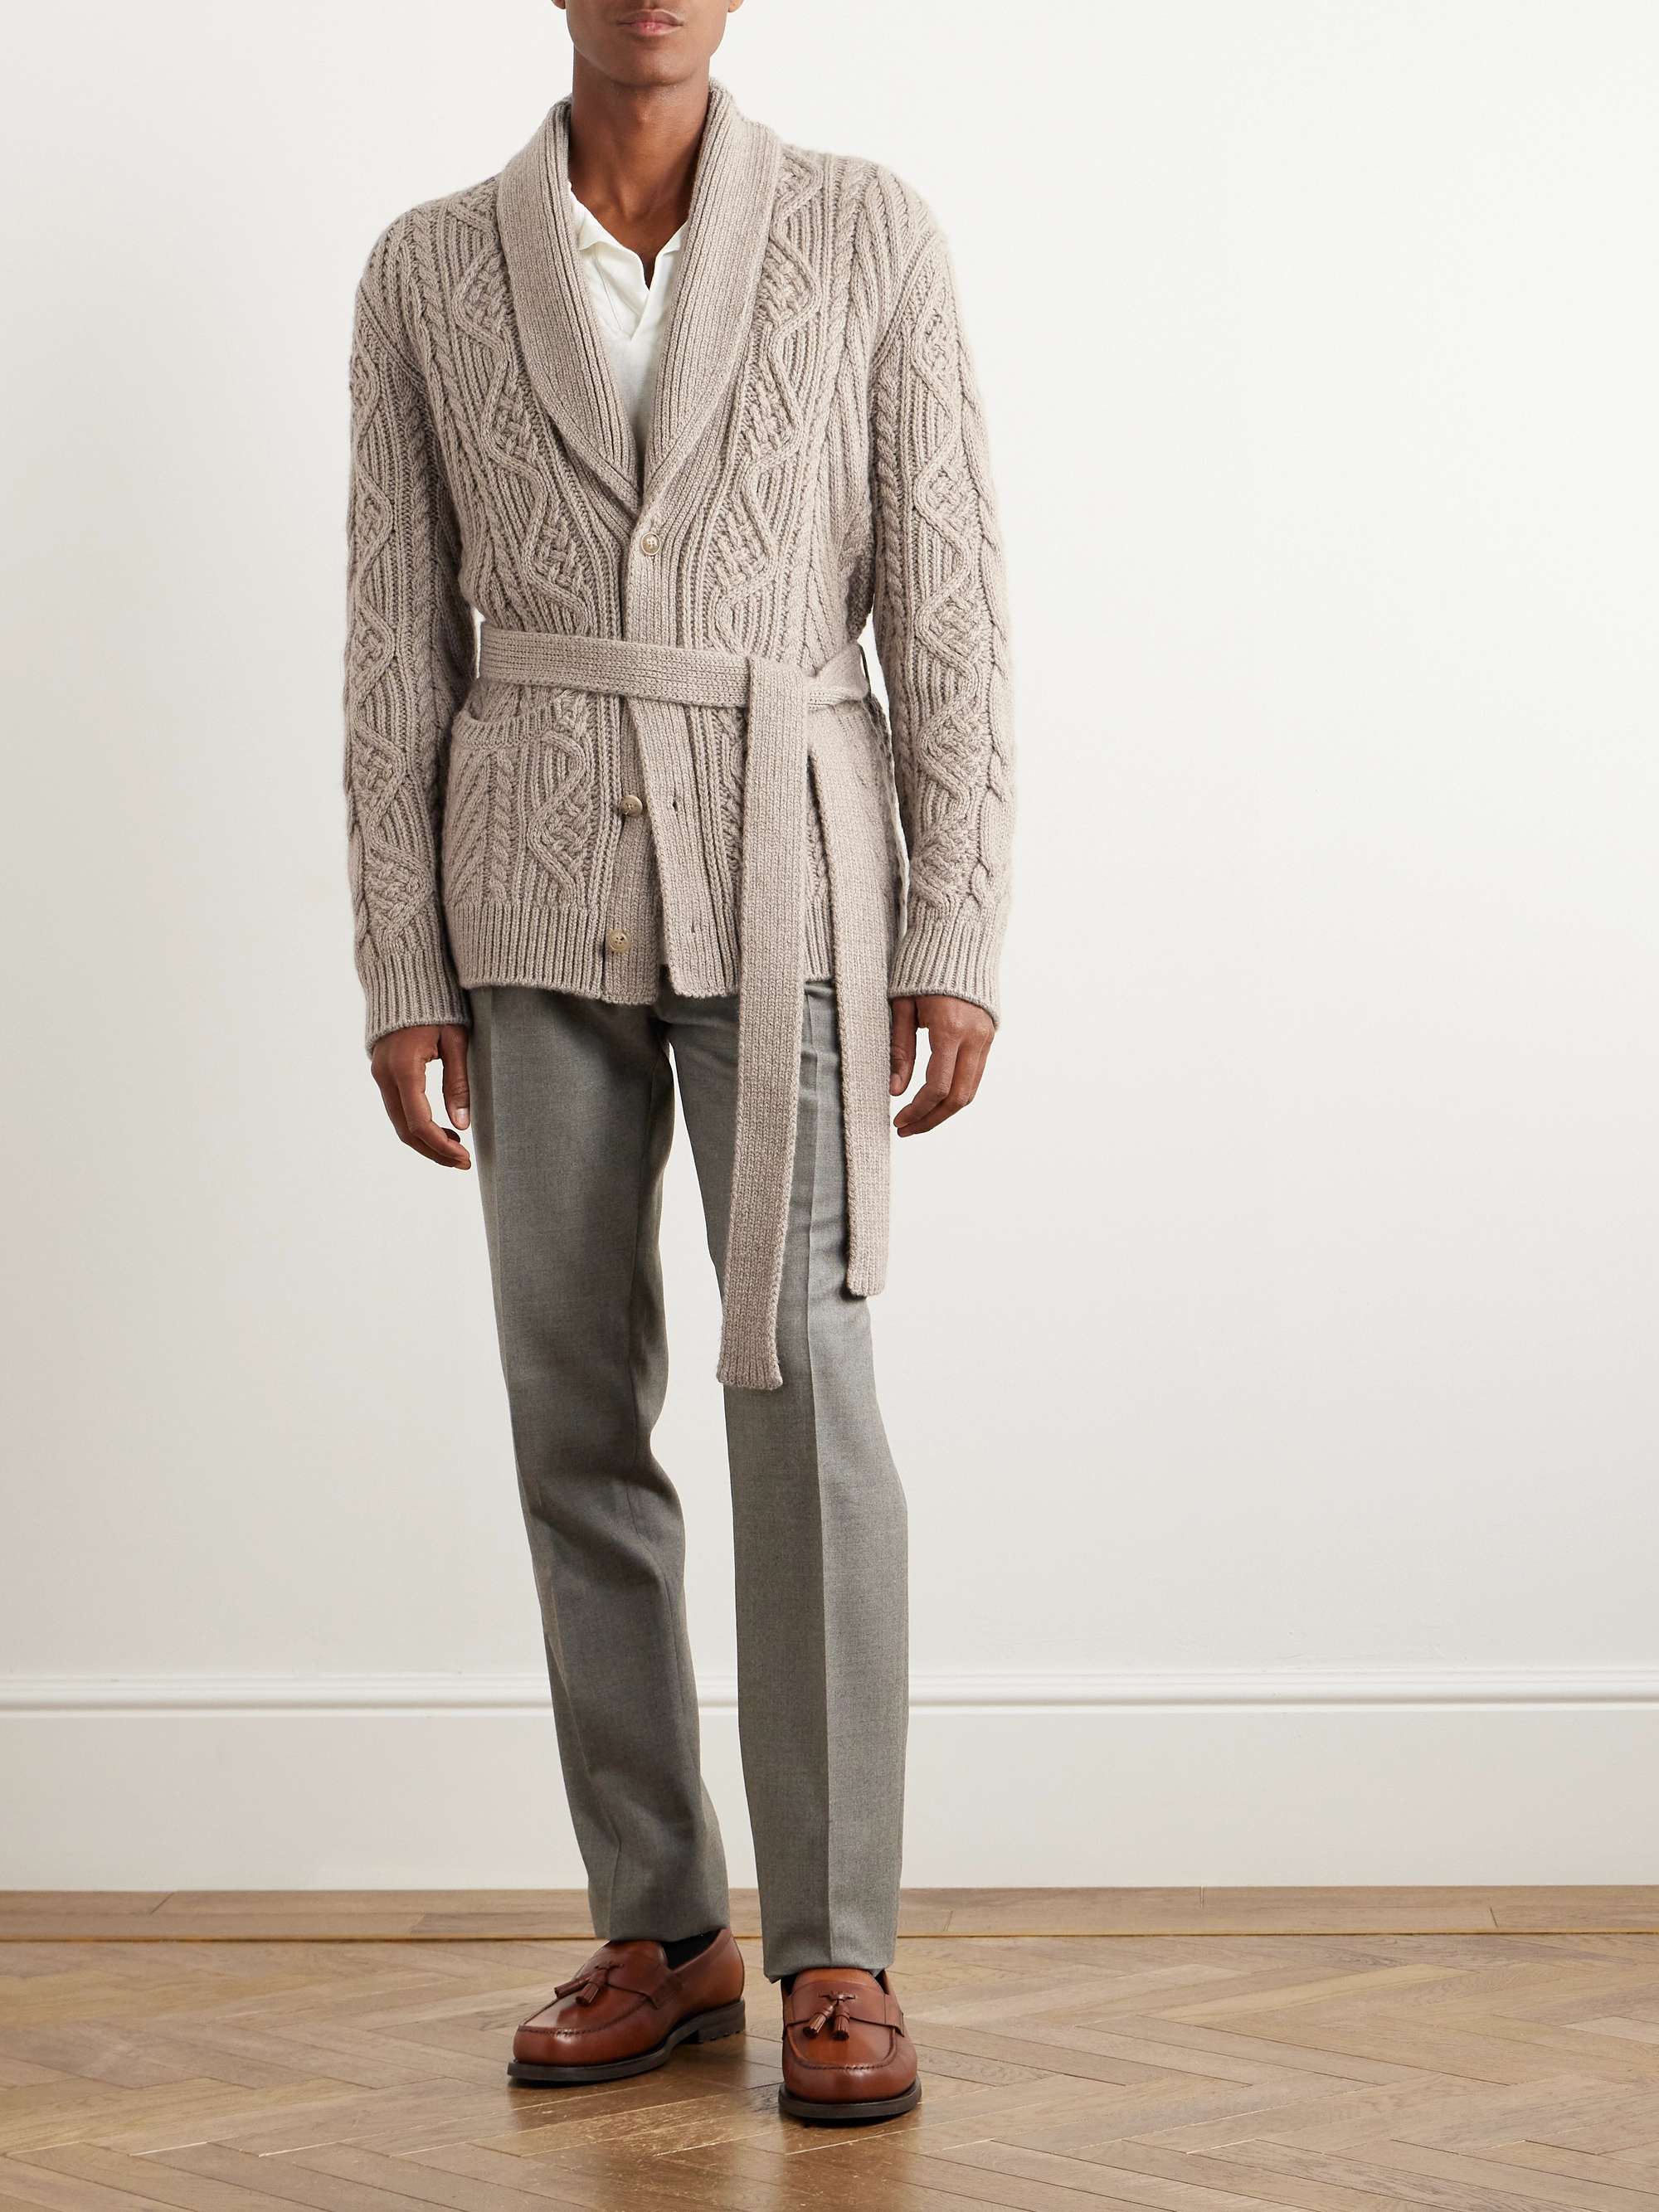 RALPH LAUREN PURPLE LABEL Shawl-Collar Belted Cable-Knit Cashmere Cardigan  for Men | MR PORTER